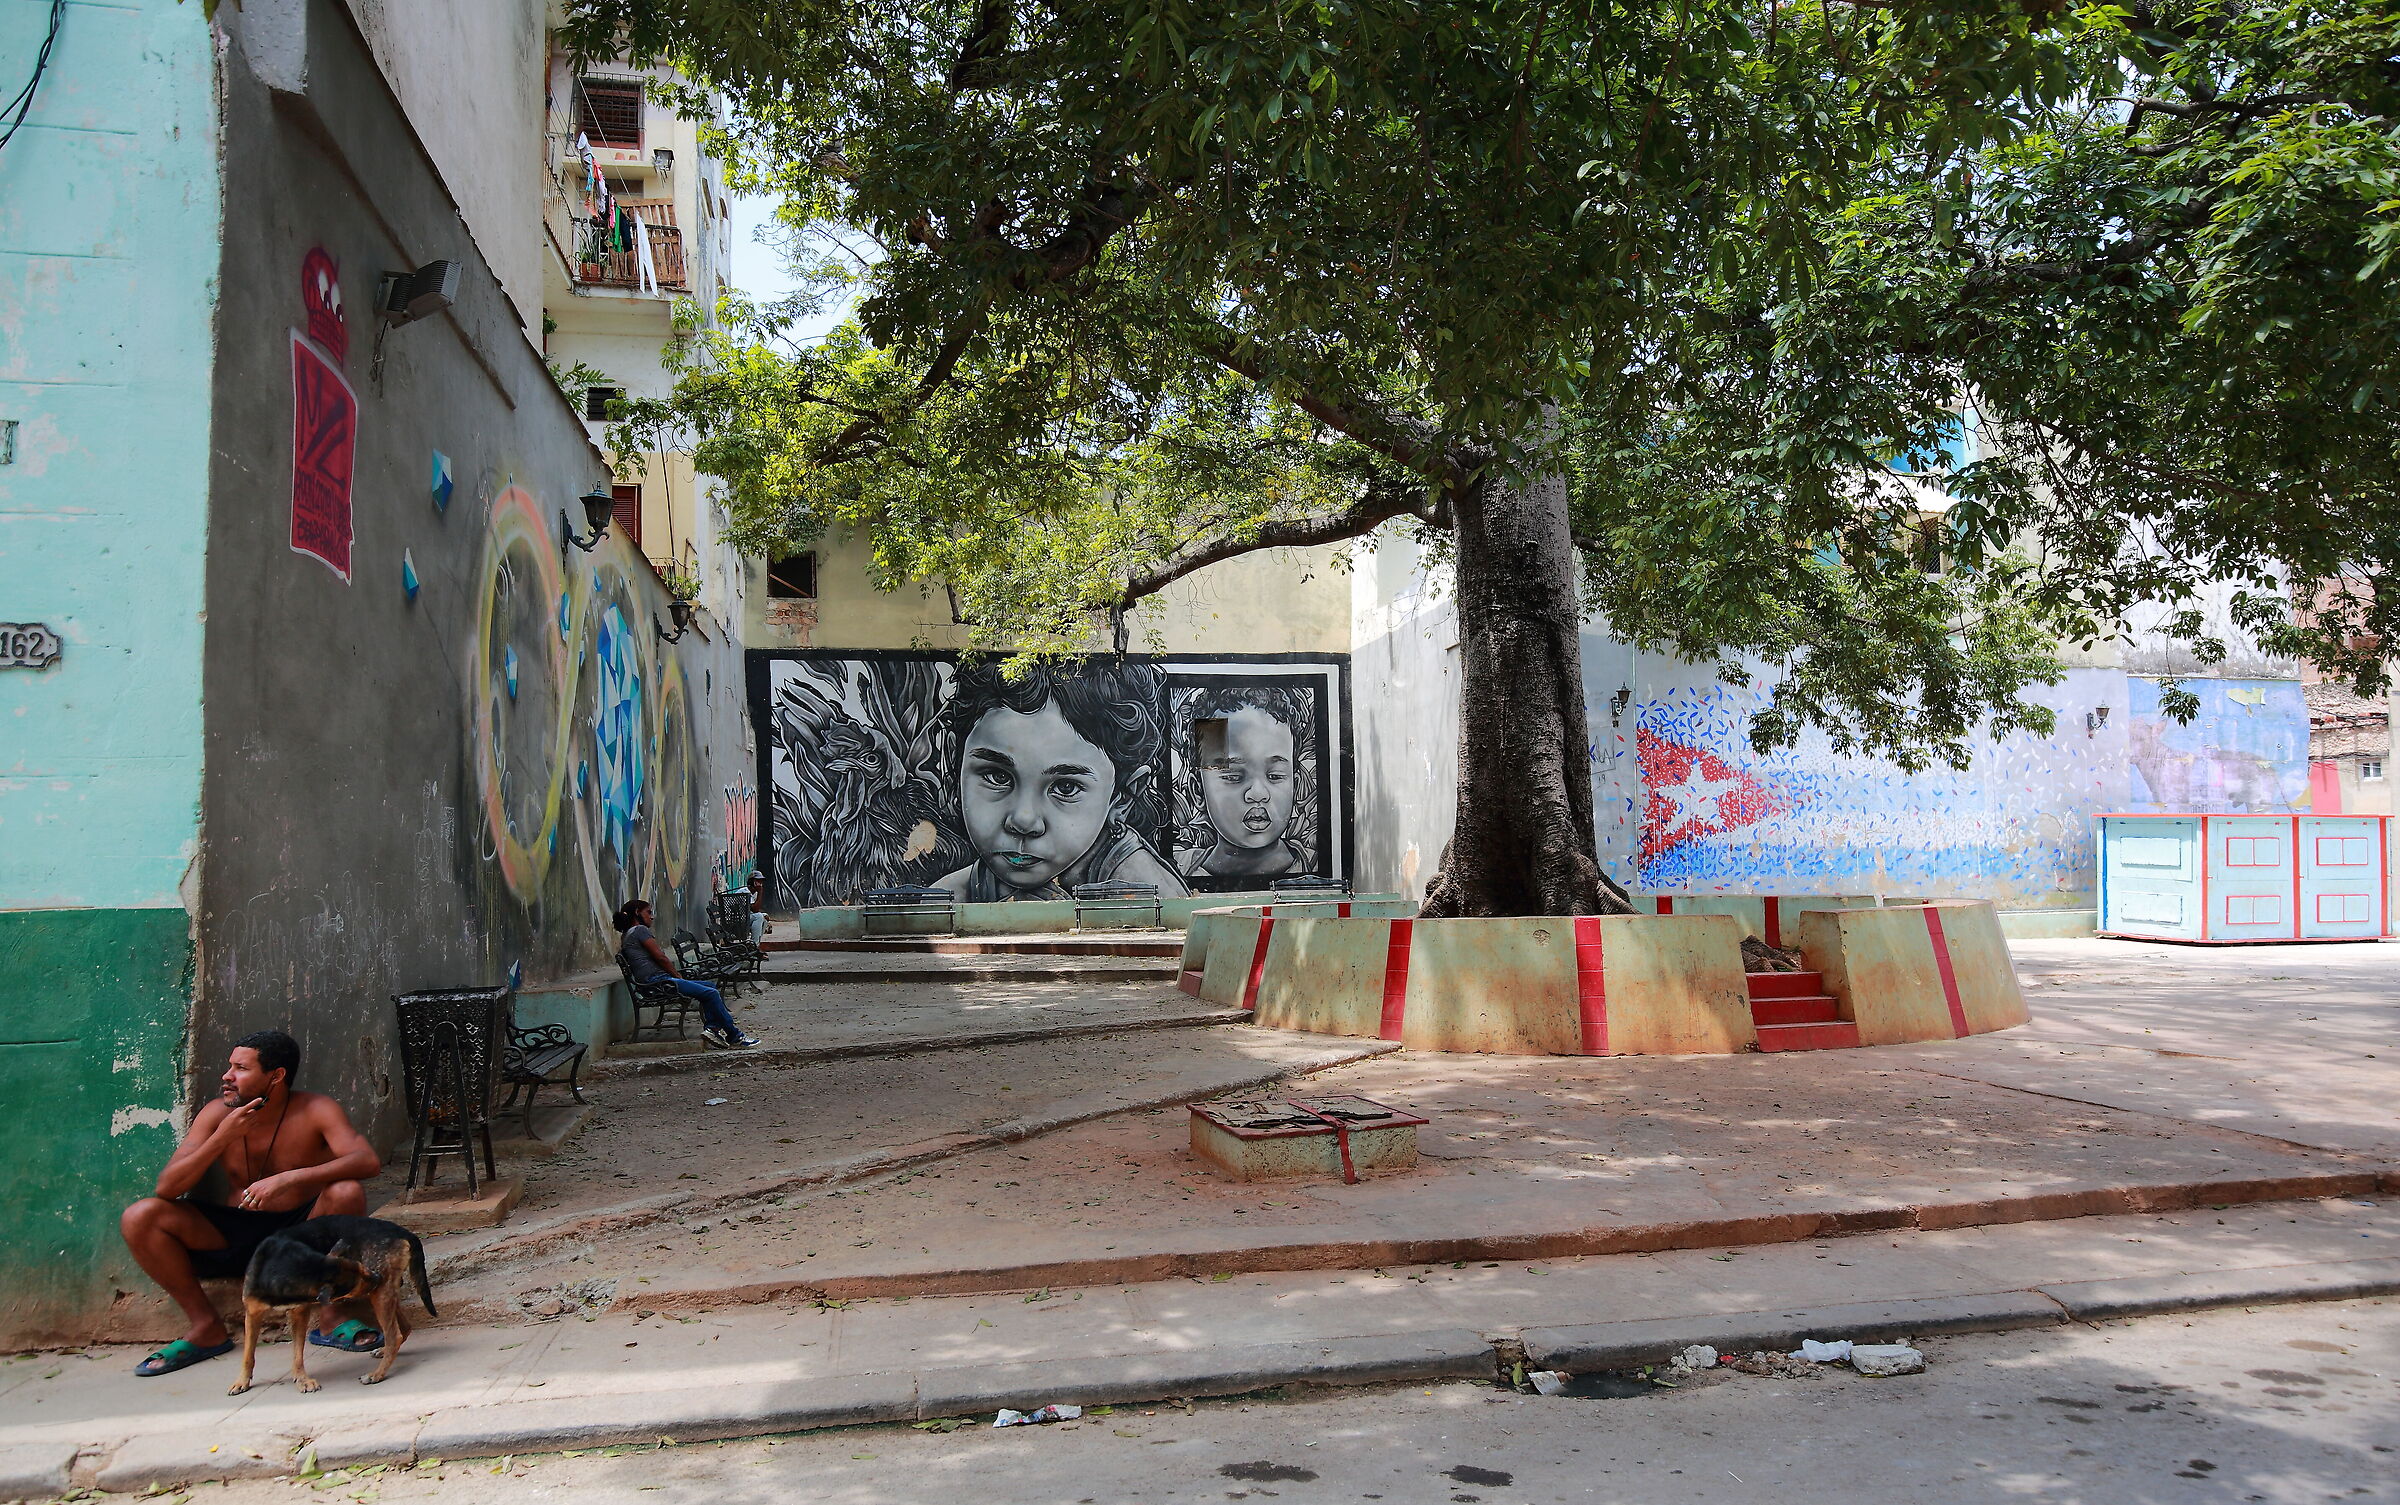 S. Isidro Distrito de Arte, the Soho de Havana ...